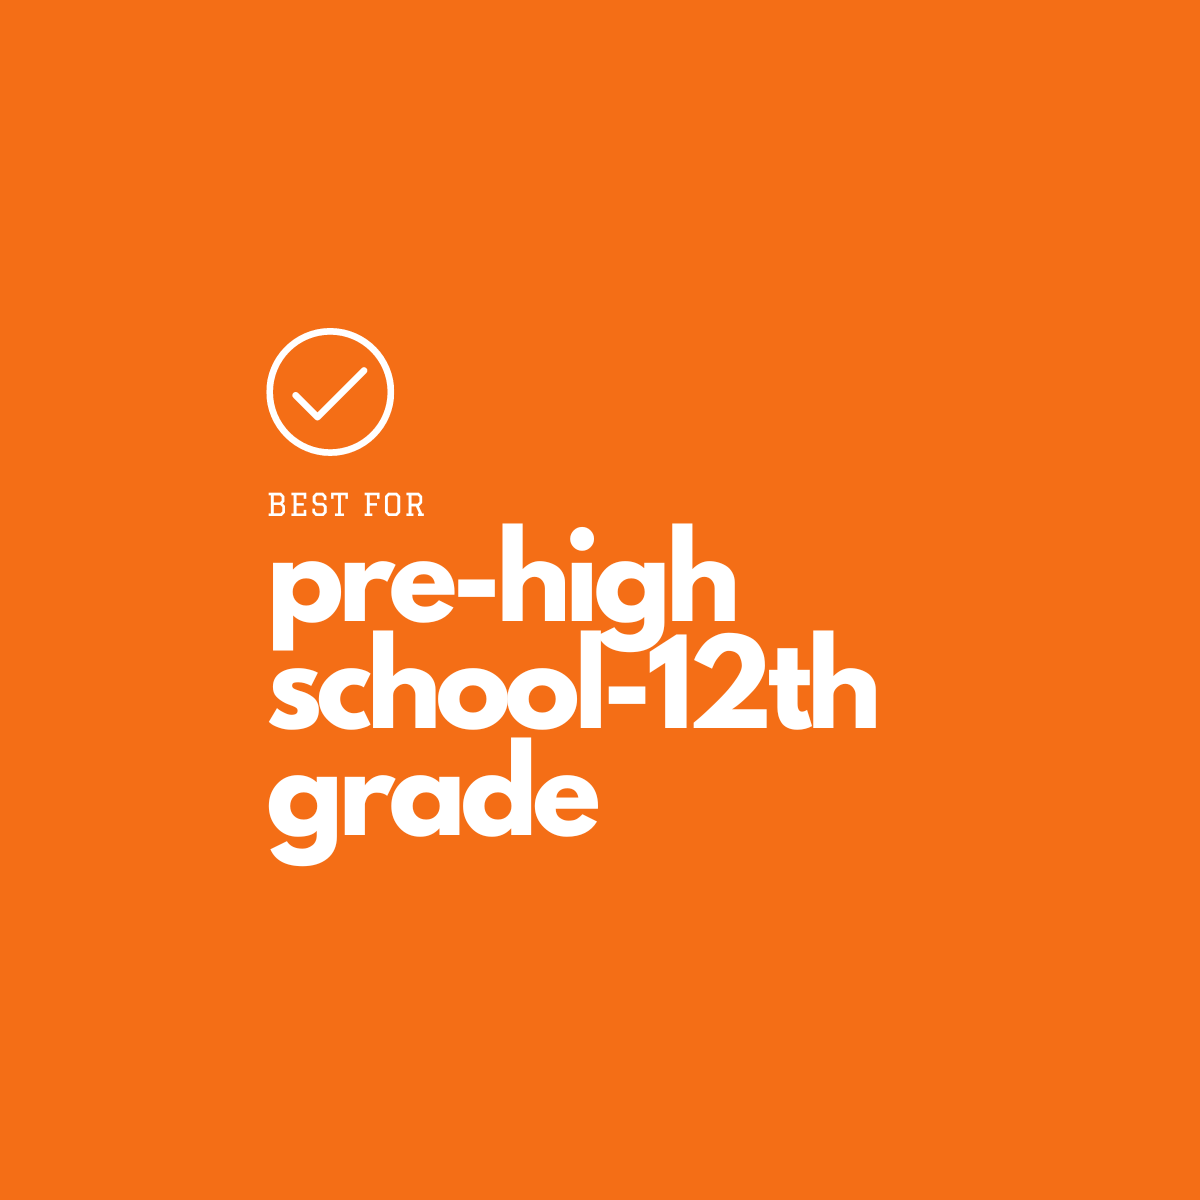 Best for pre-high school-12th grade